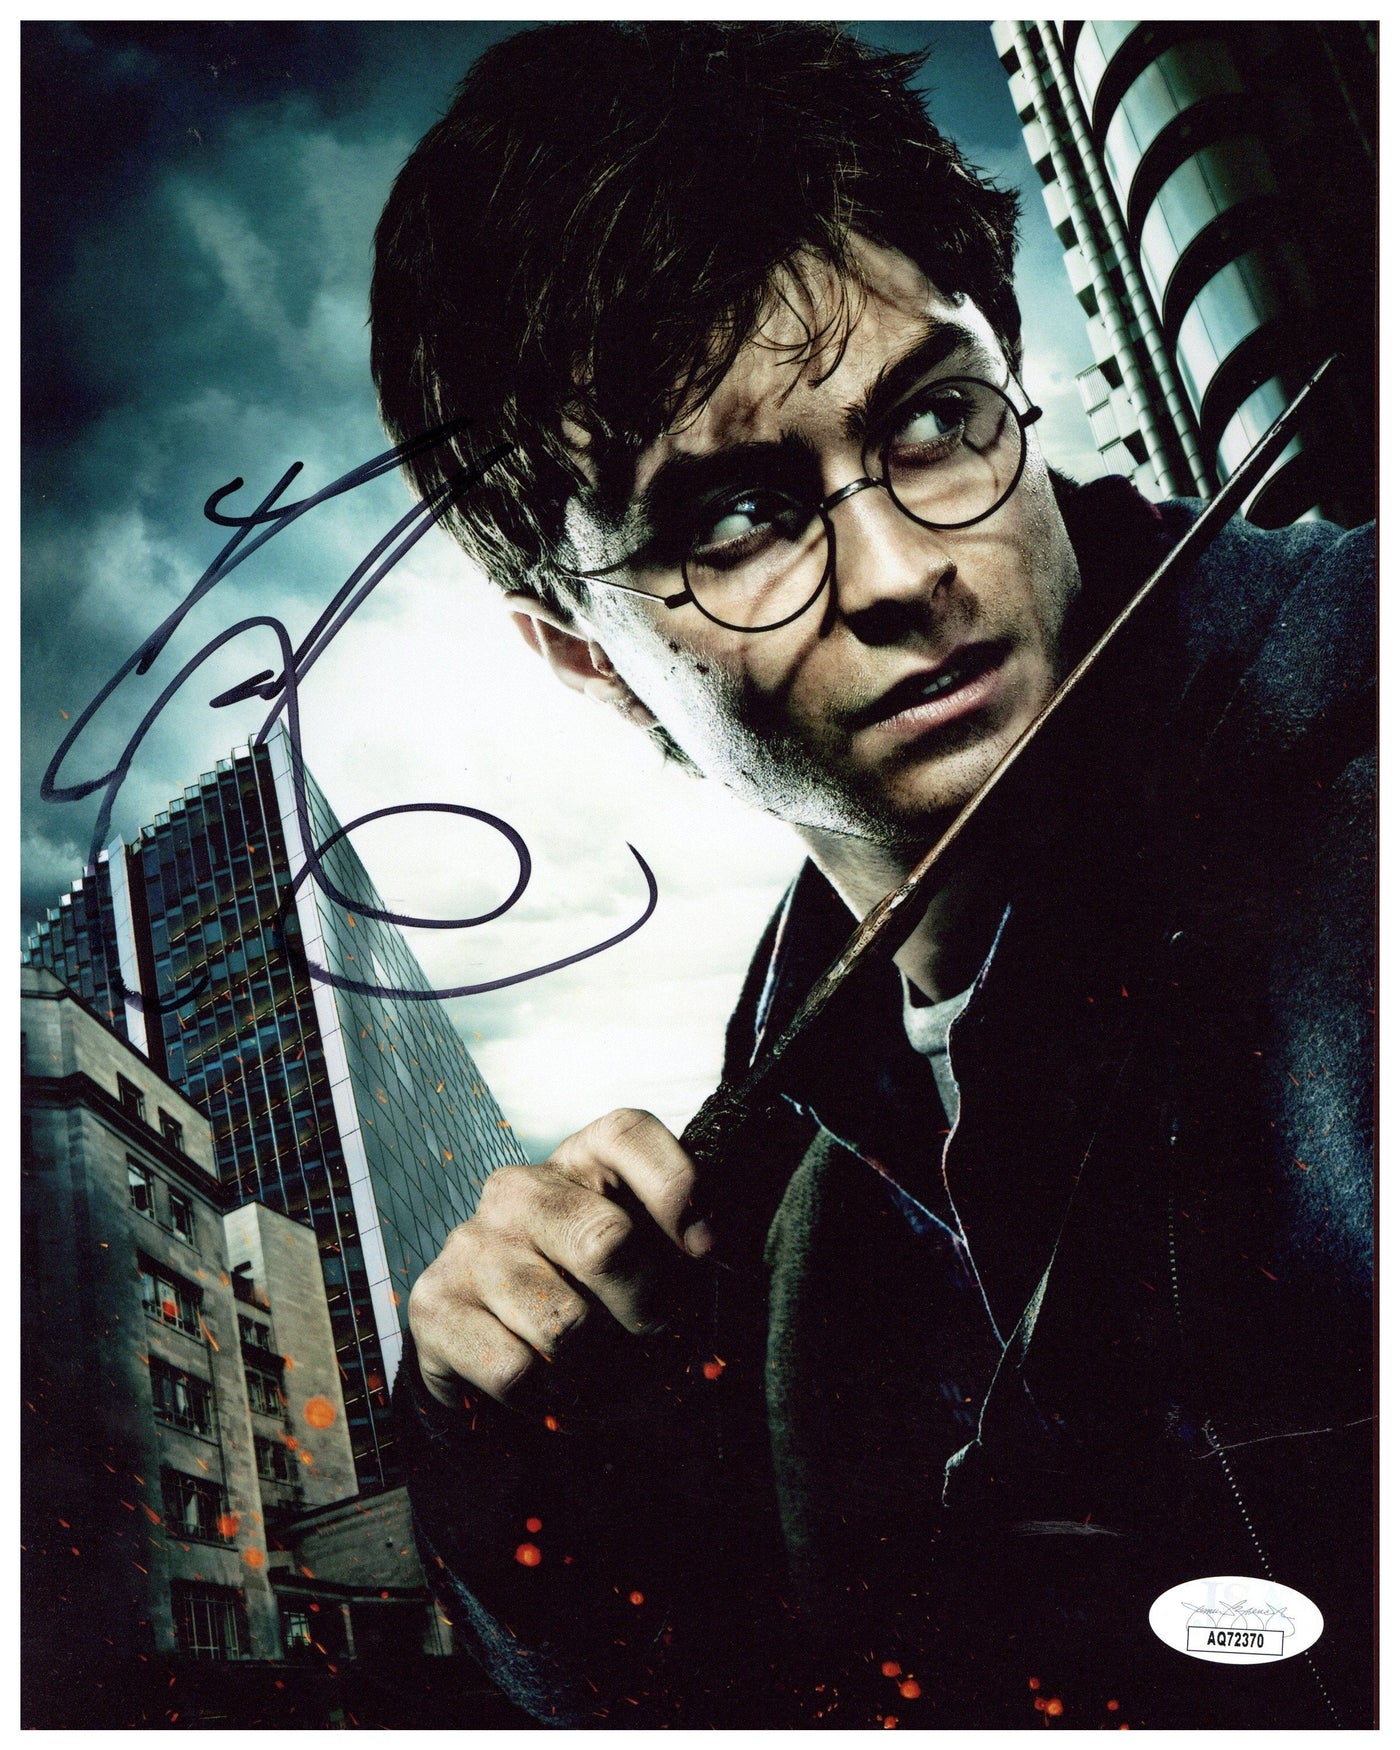 Daniel Radcliffe Signed 8x10 Photo Harry Potter Autographed JSA COA #4